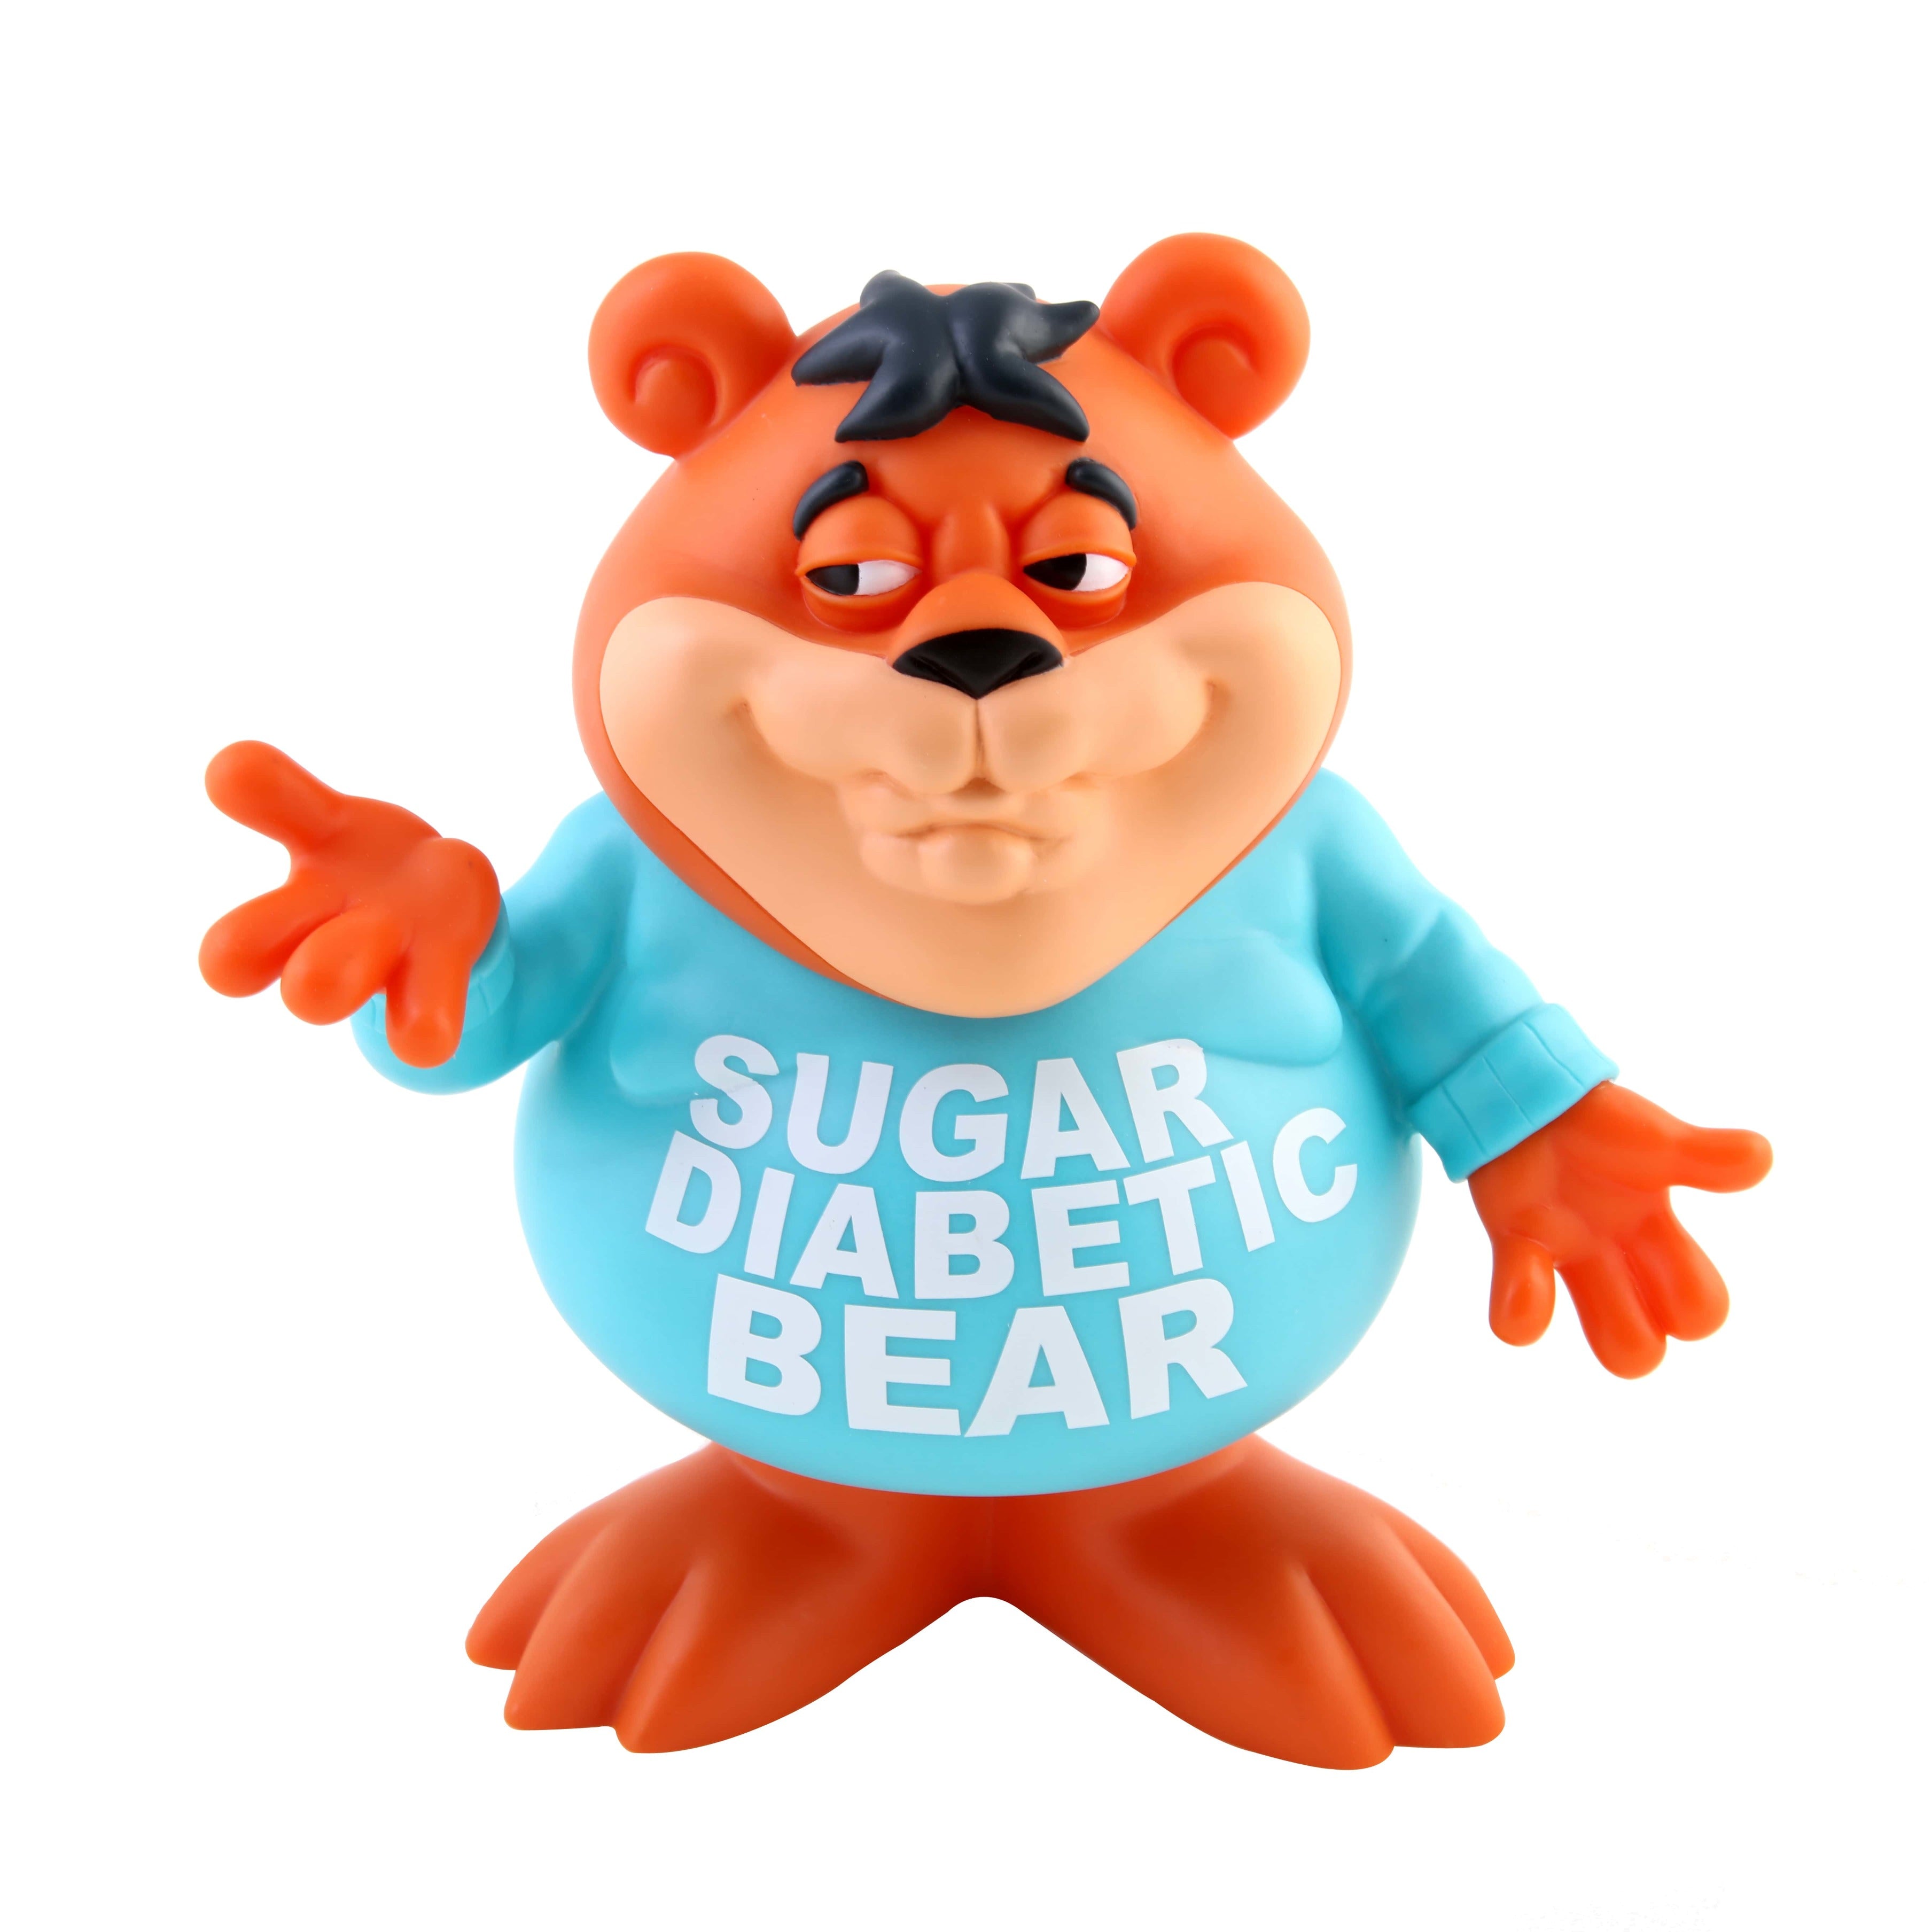 sugar diabetic bear front-min